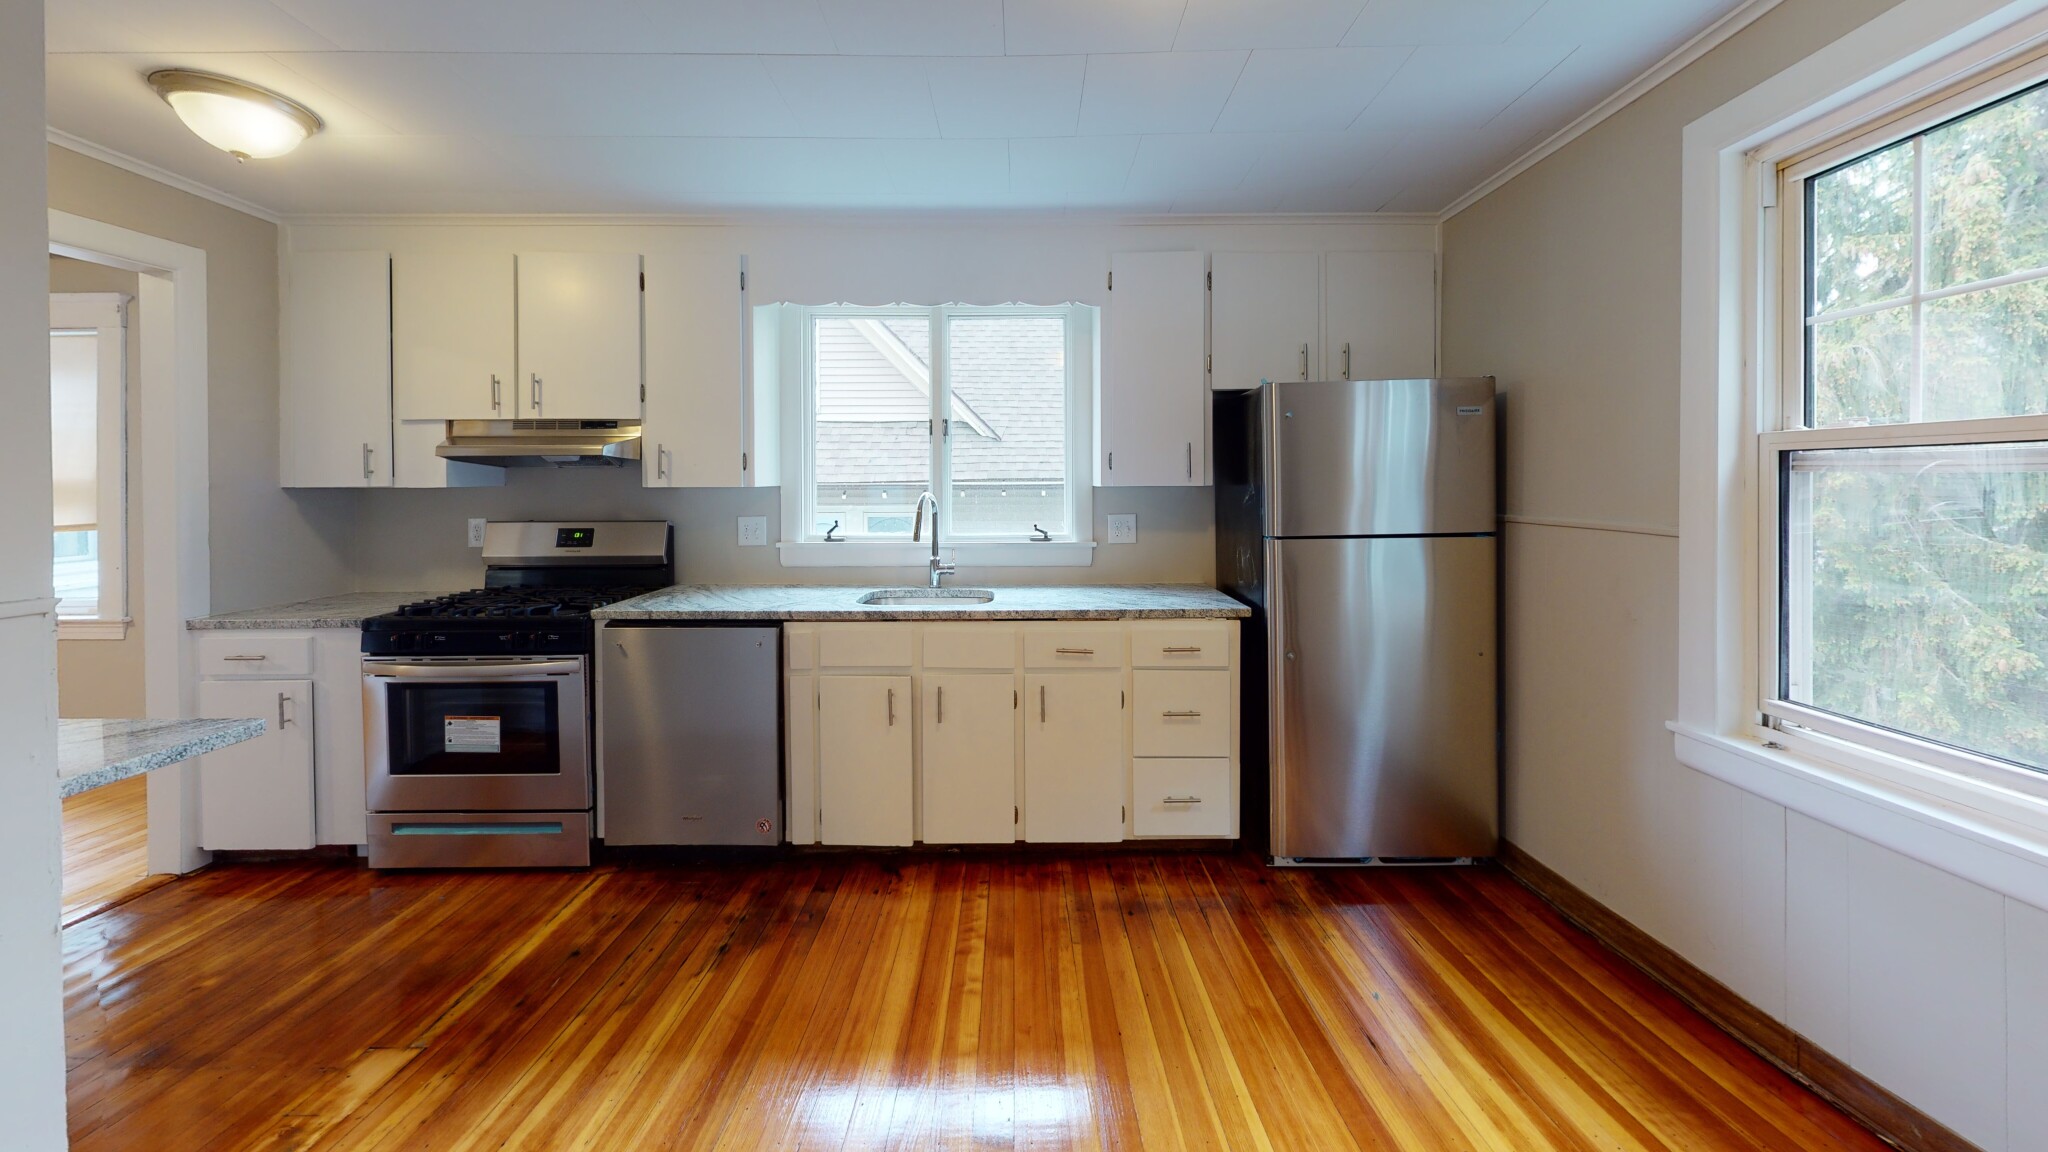 Photos of apartment on Waverly St.,Boston MA 02135